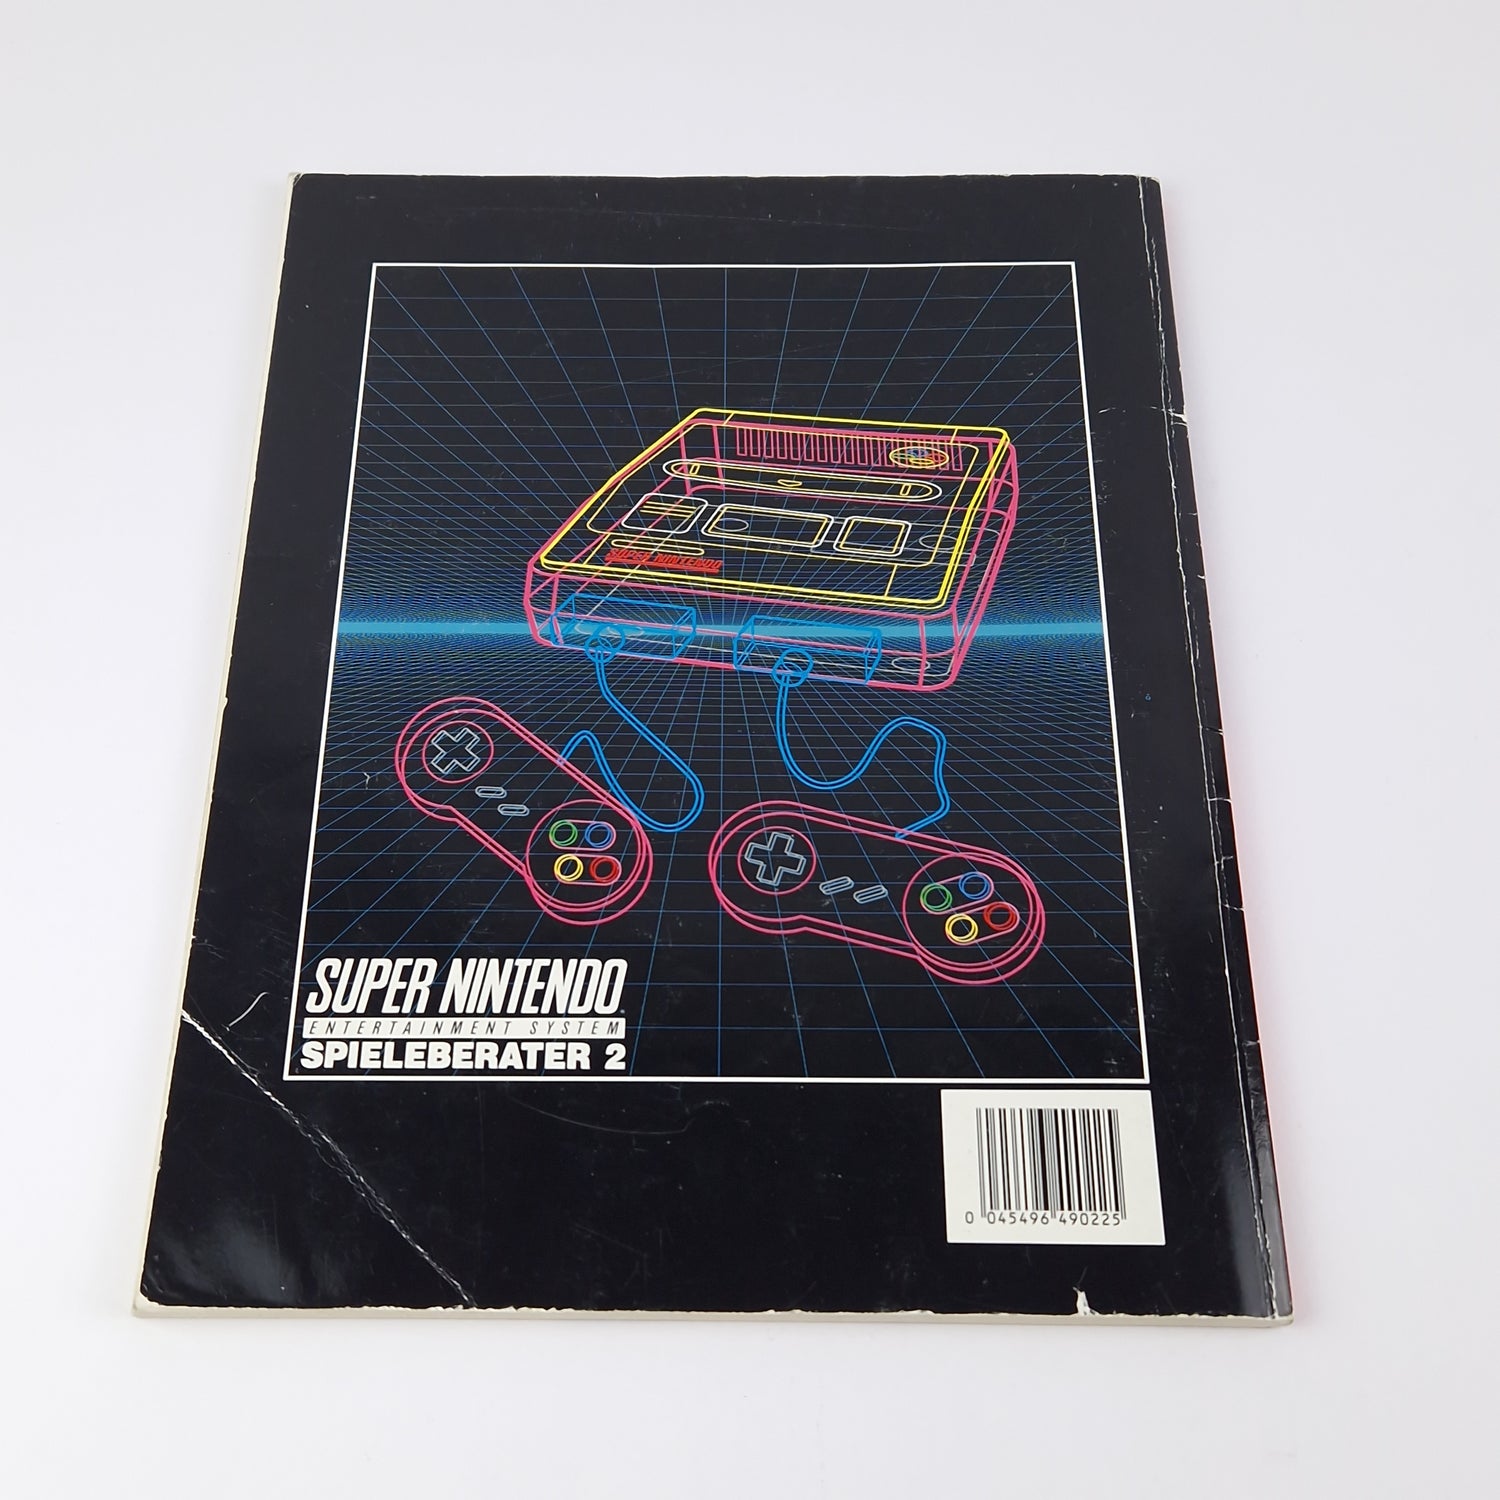 Der offizielle Super Nintendo Spieleberater 2 - SNES Guide Book